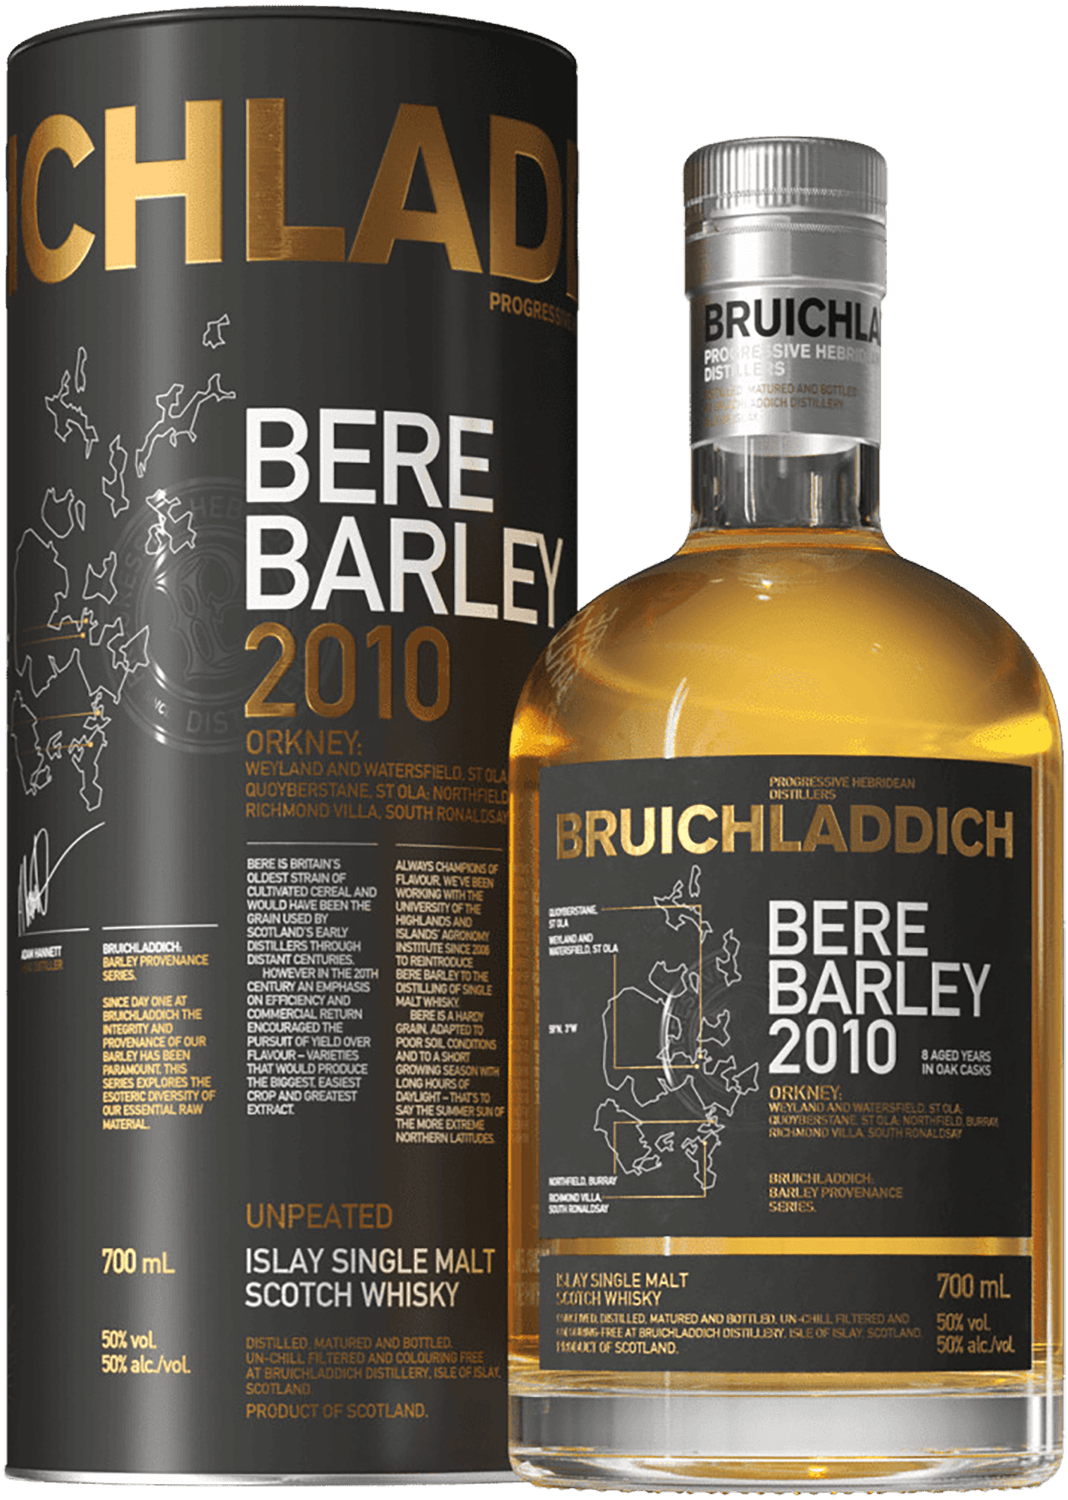 Bruichladdich Bere Barley Islay single malt scotch whisky (gift box)